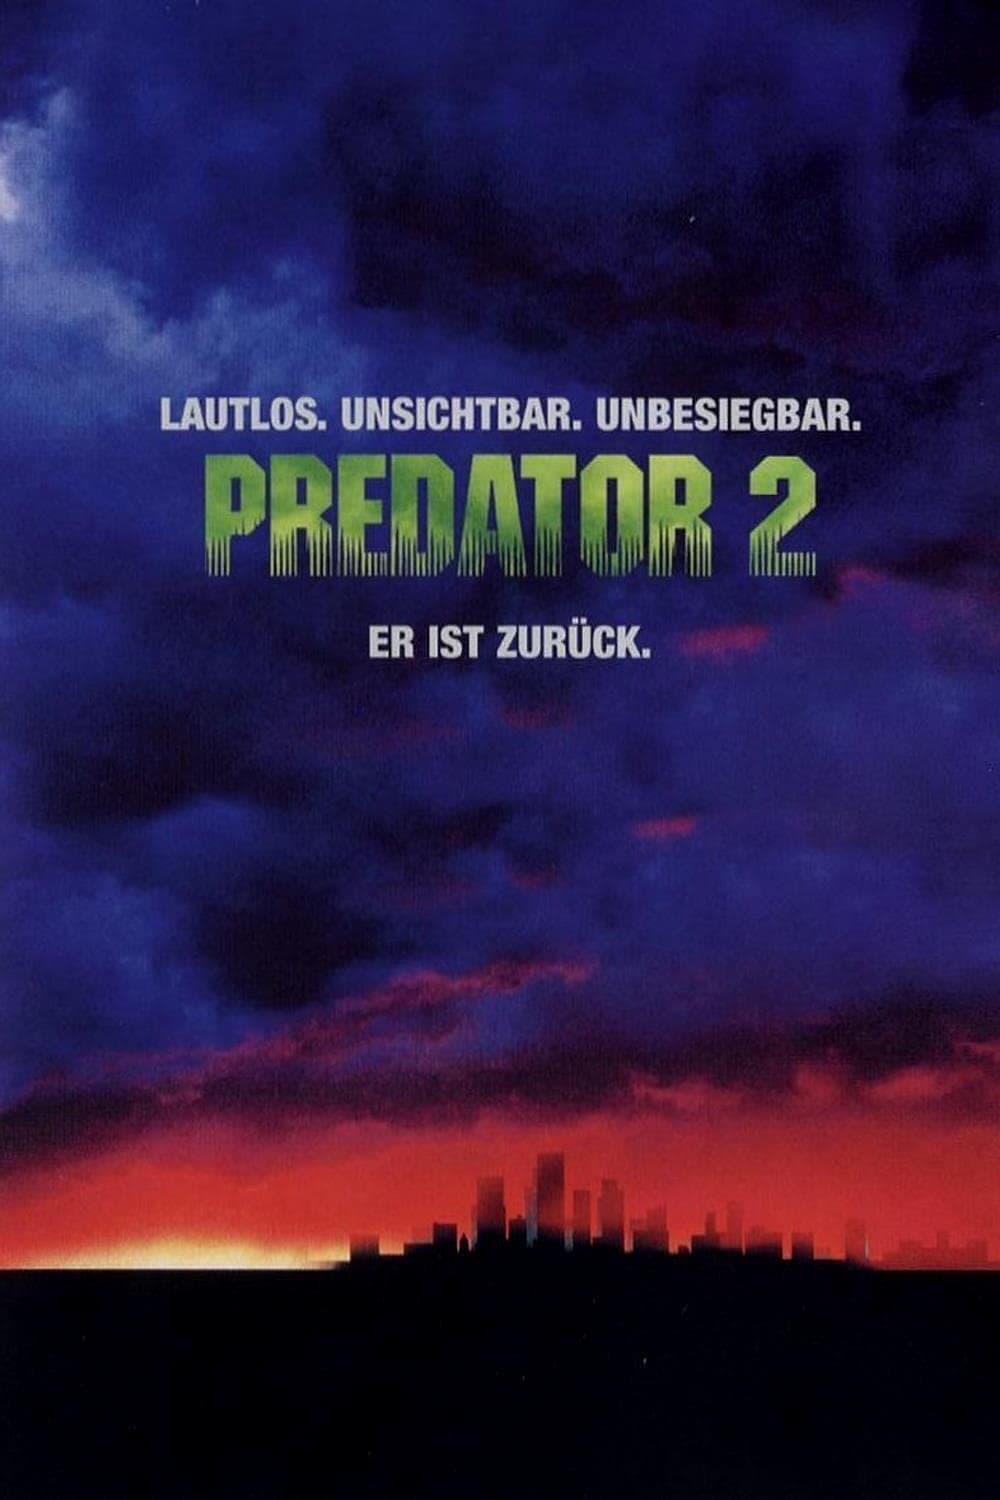 Predator 2 poster